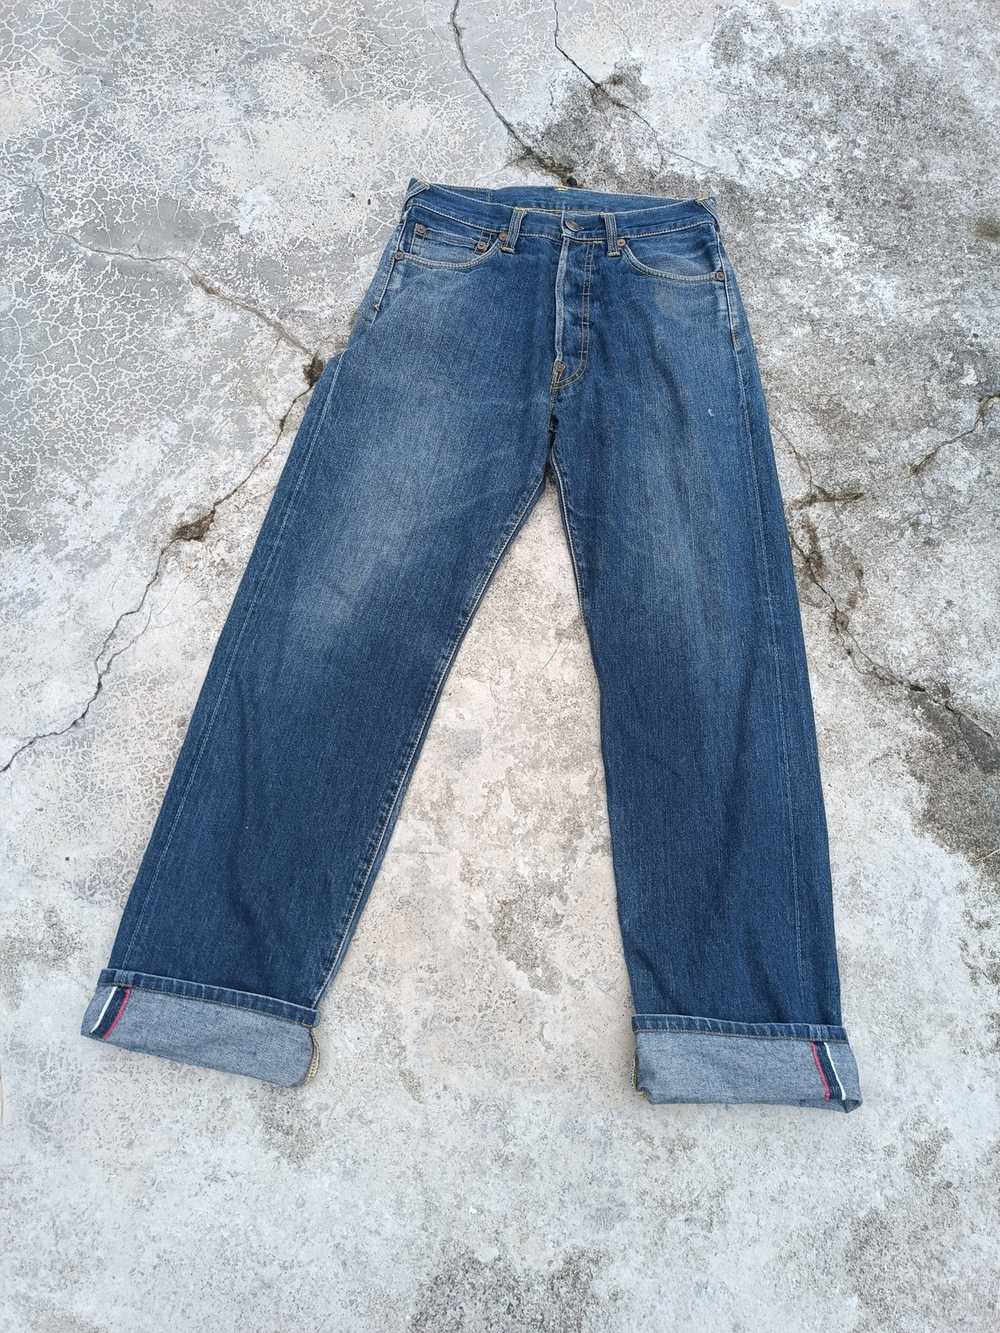 Evisu × Japanese Brand × Vintage Evisu Jeans Vint… - image 10